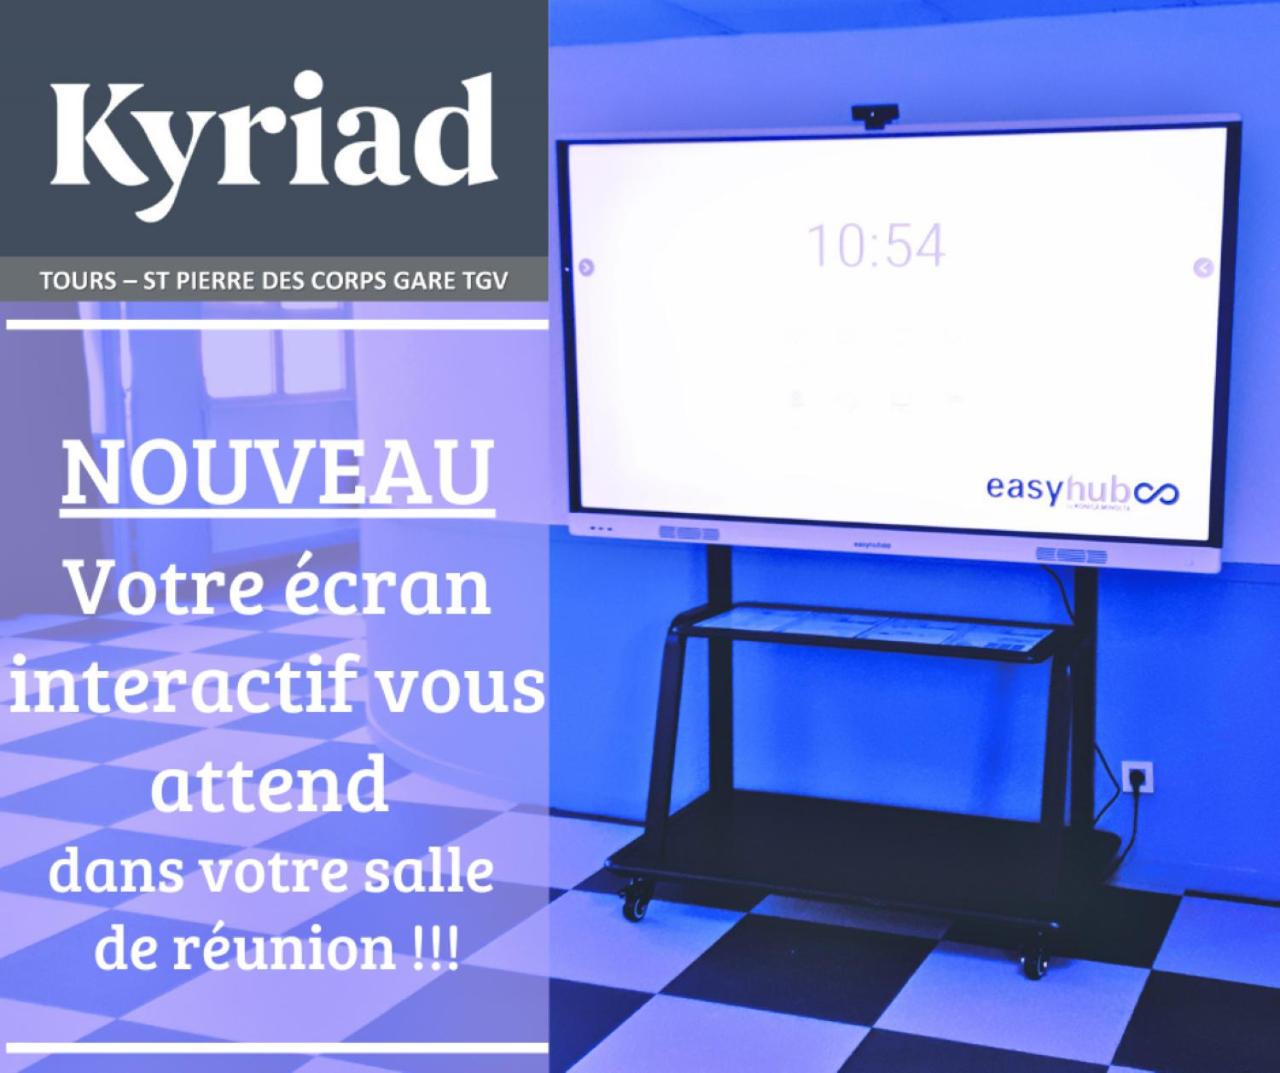 Hotel Kyriad Tours - Saint Pierre Des Corps - Gare